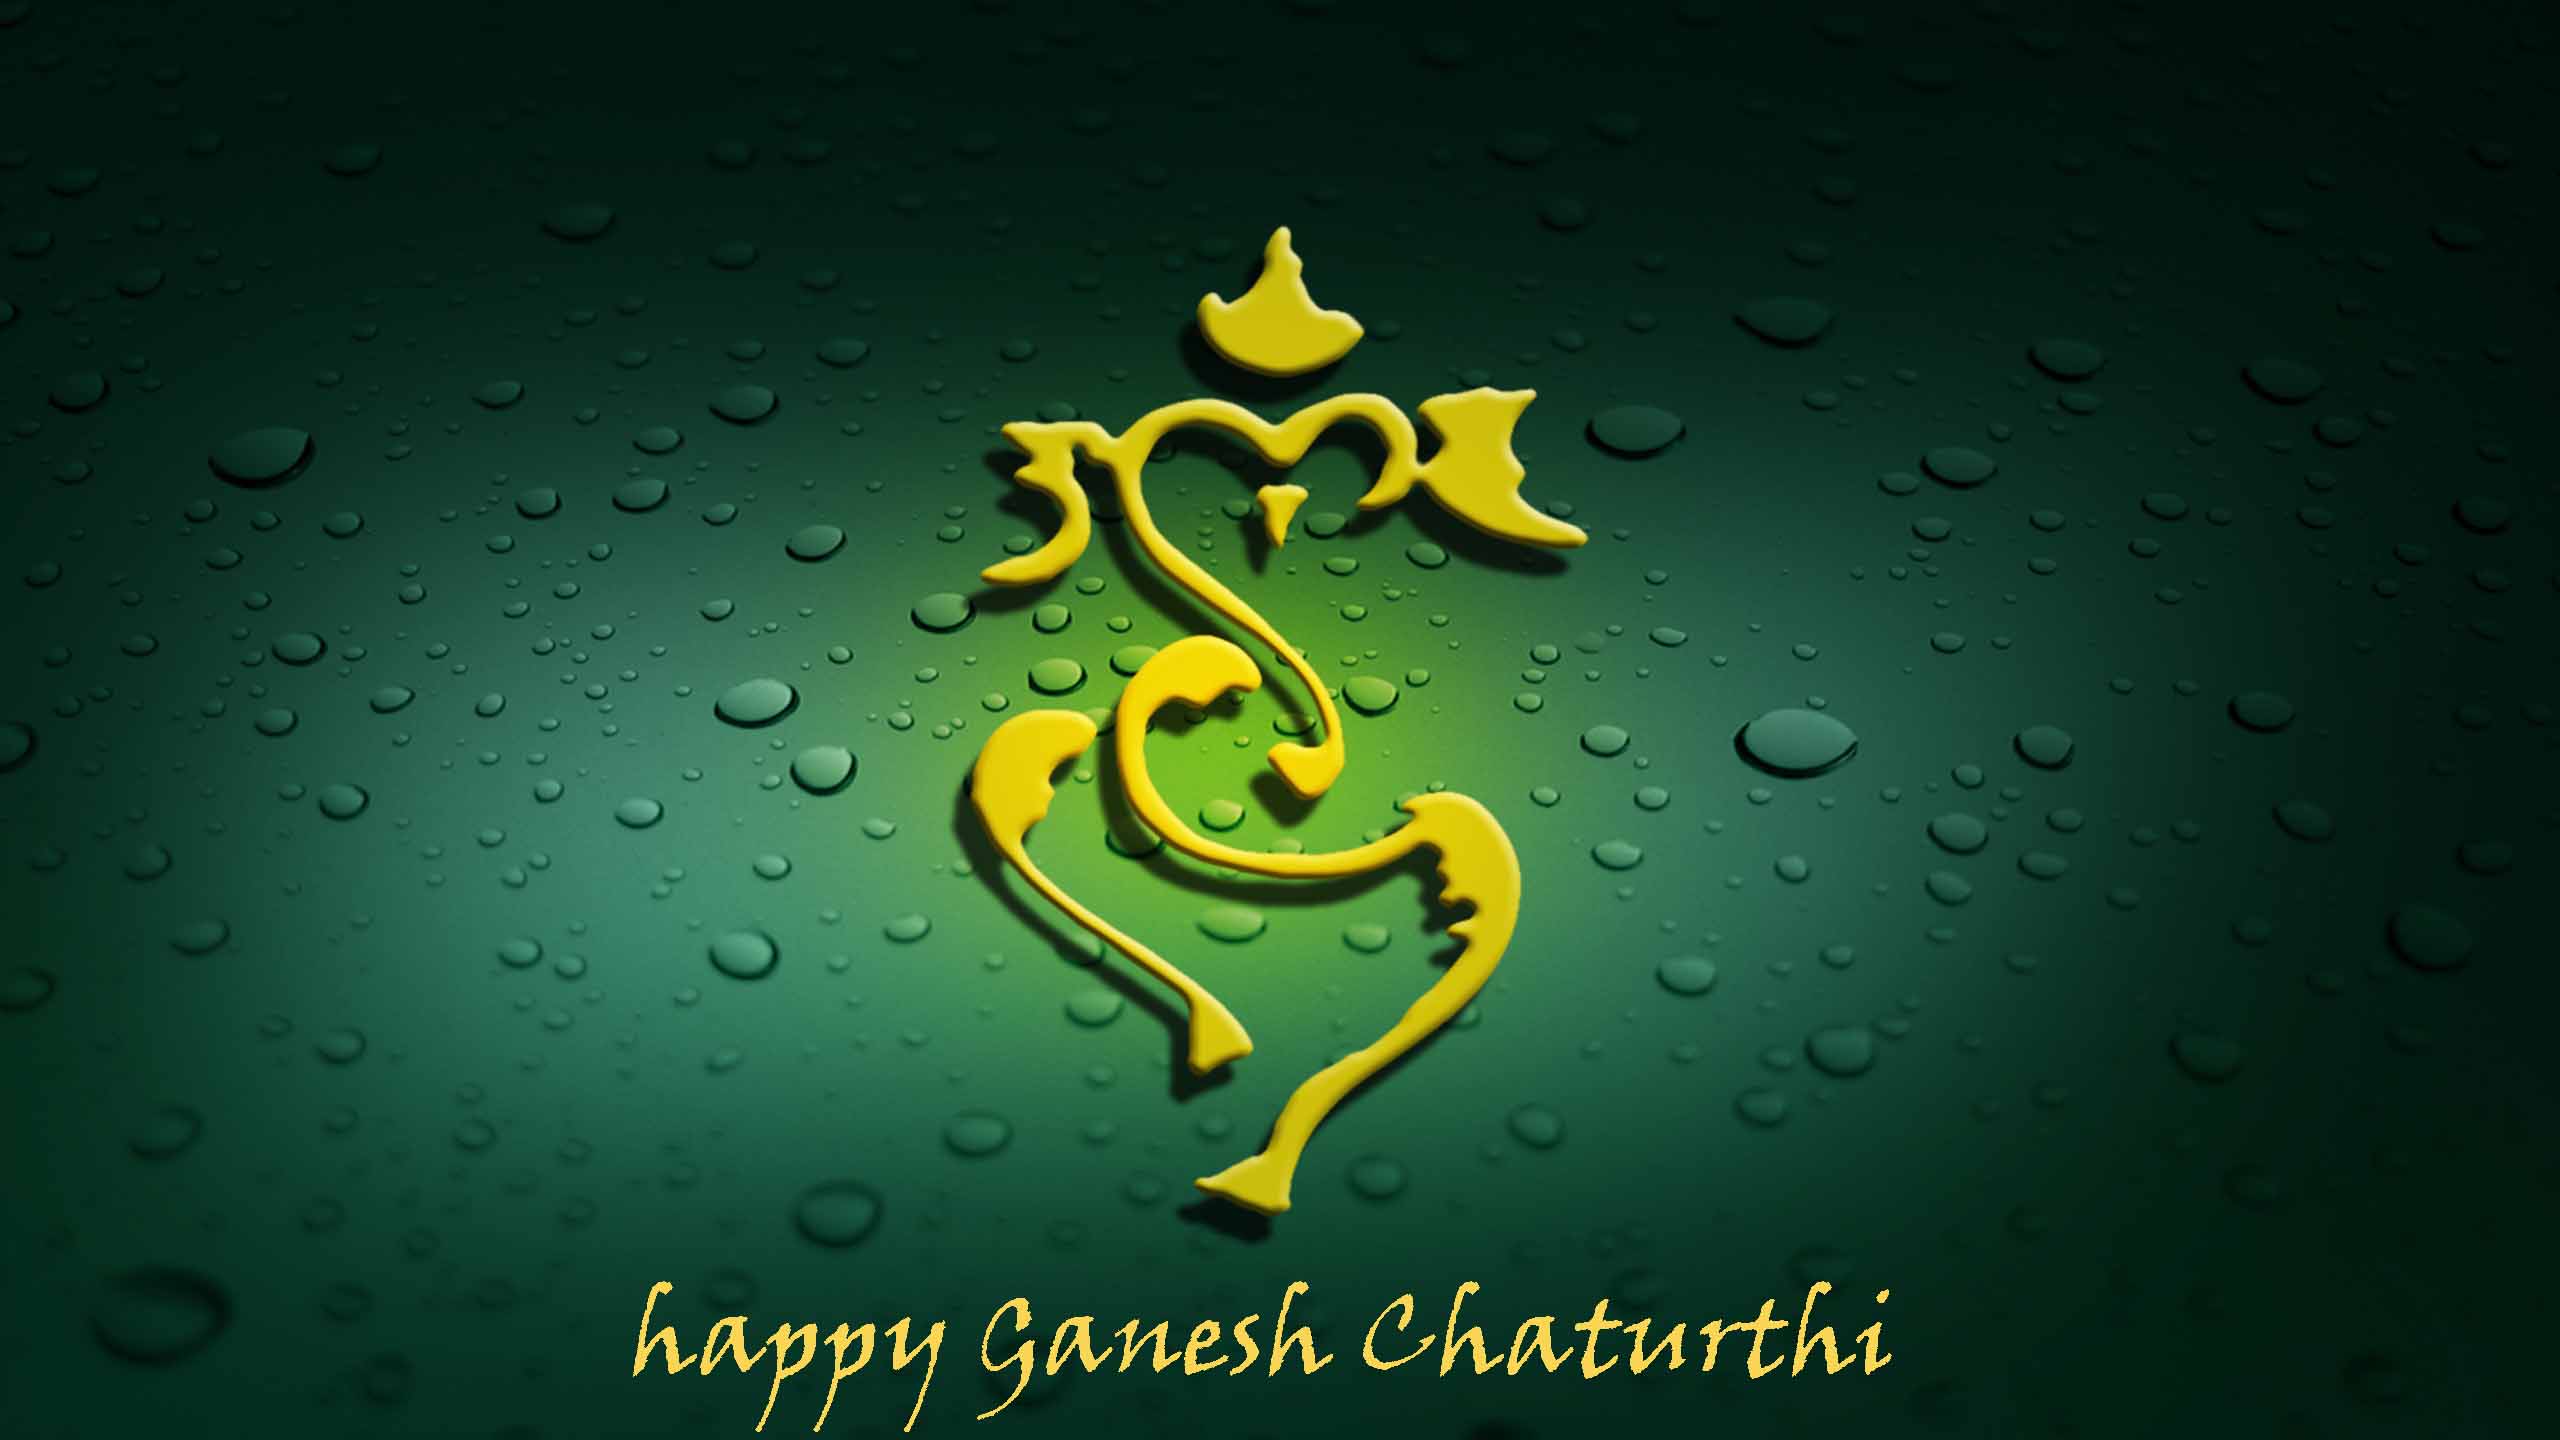 Happy Ganesh Chaturthi 2019 - 2560x1440 Wallpaper 